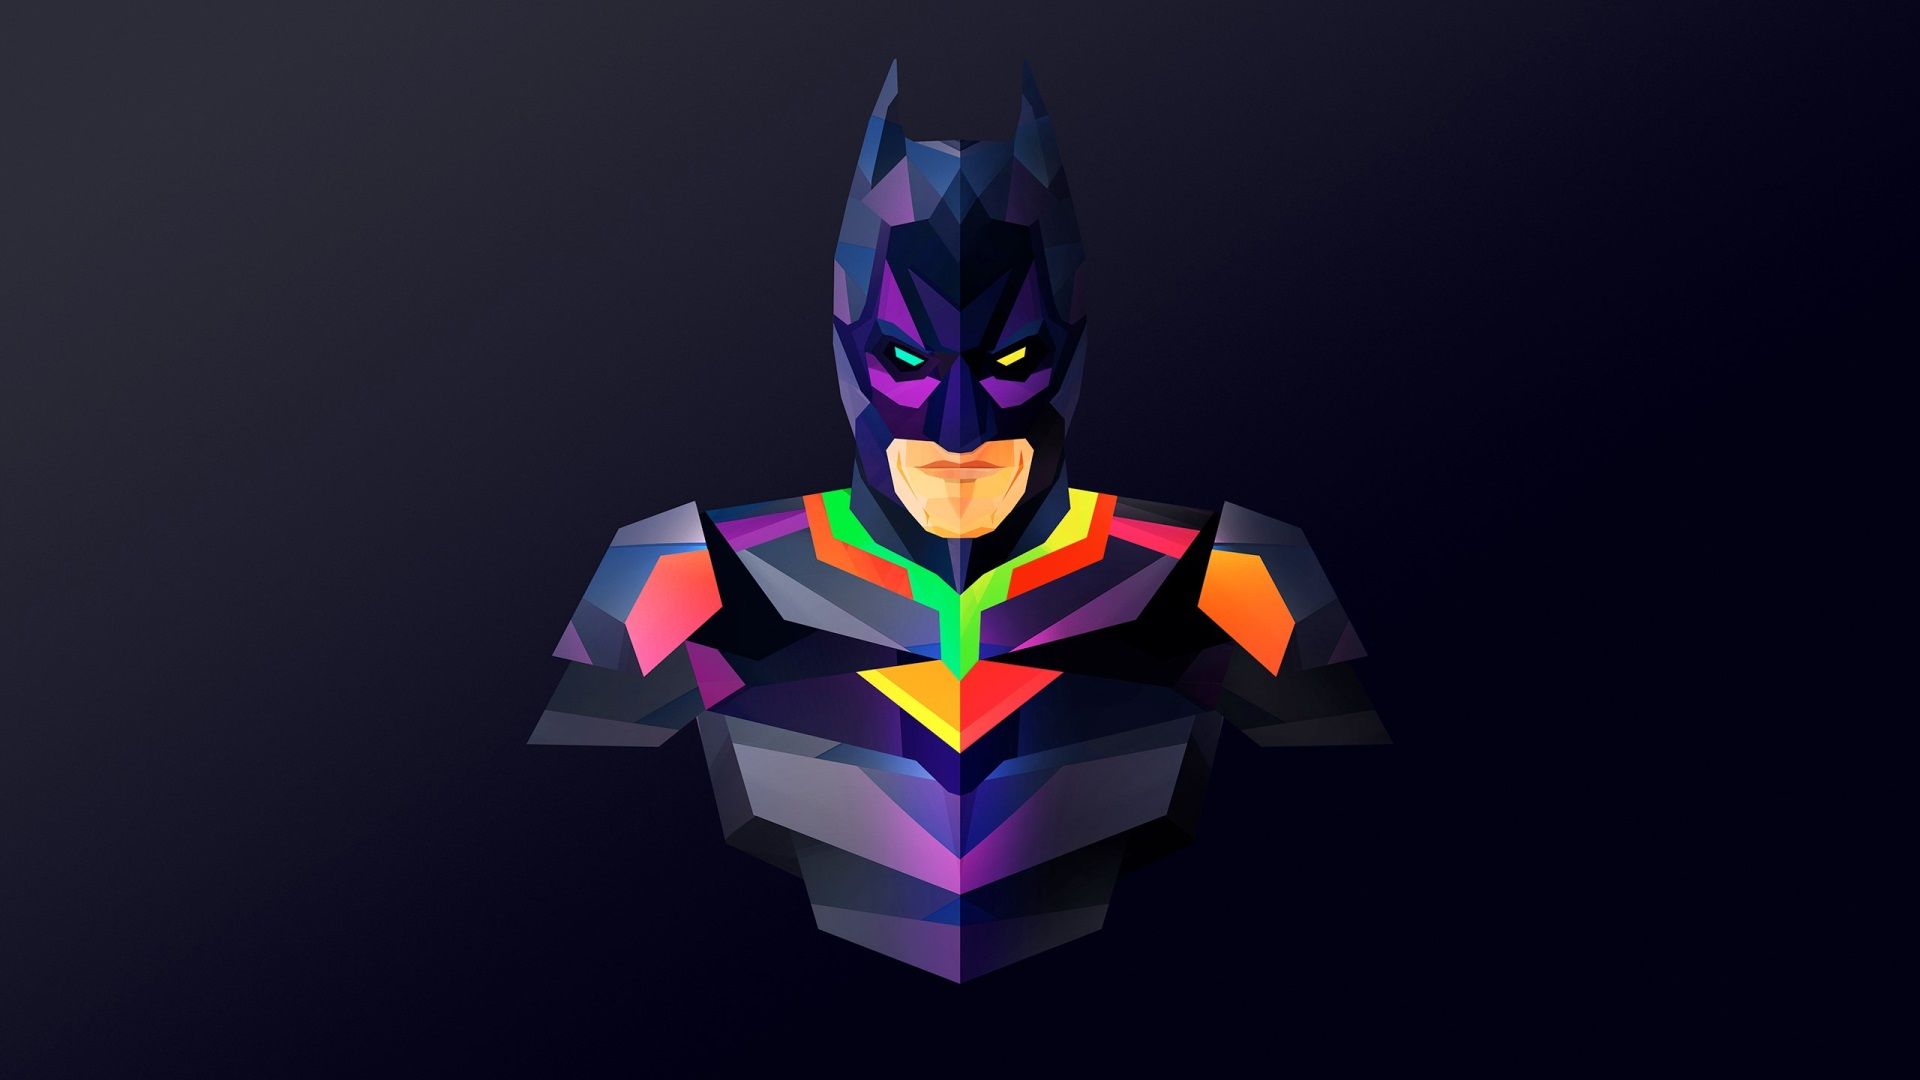 1920x1080 batman pc wallpaper free download hd Batman in 2019